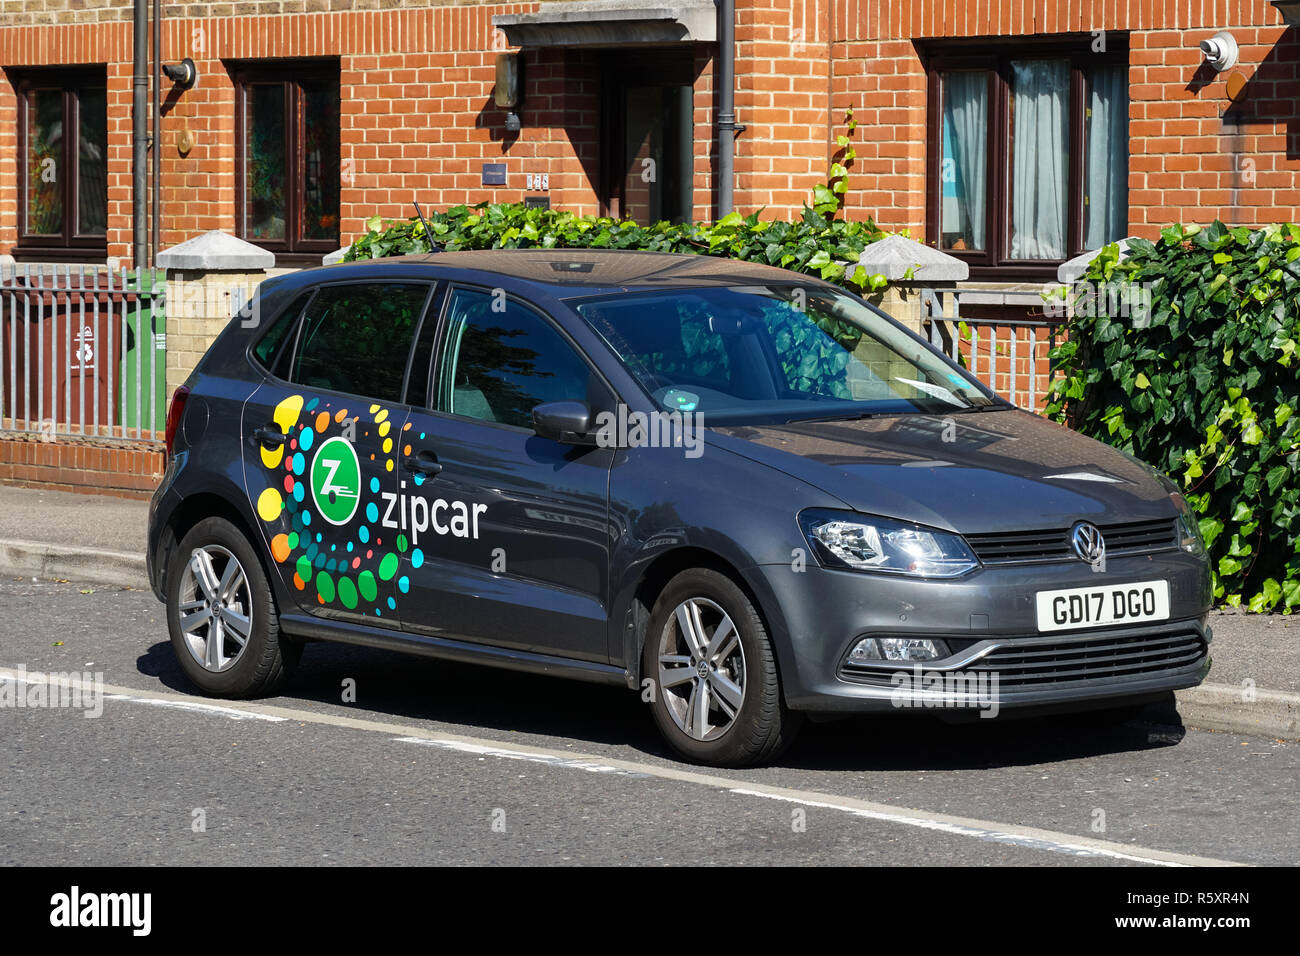 Zipcar on residential street in London, England United Kingdom UK Stock Photo